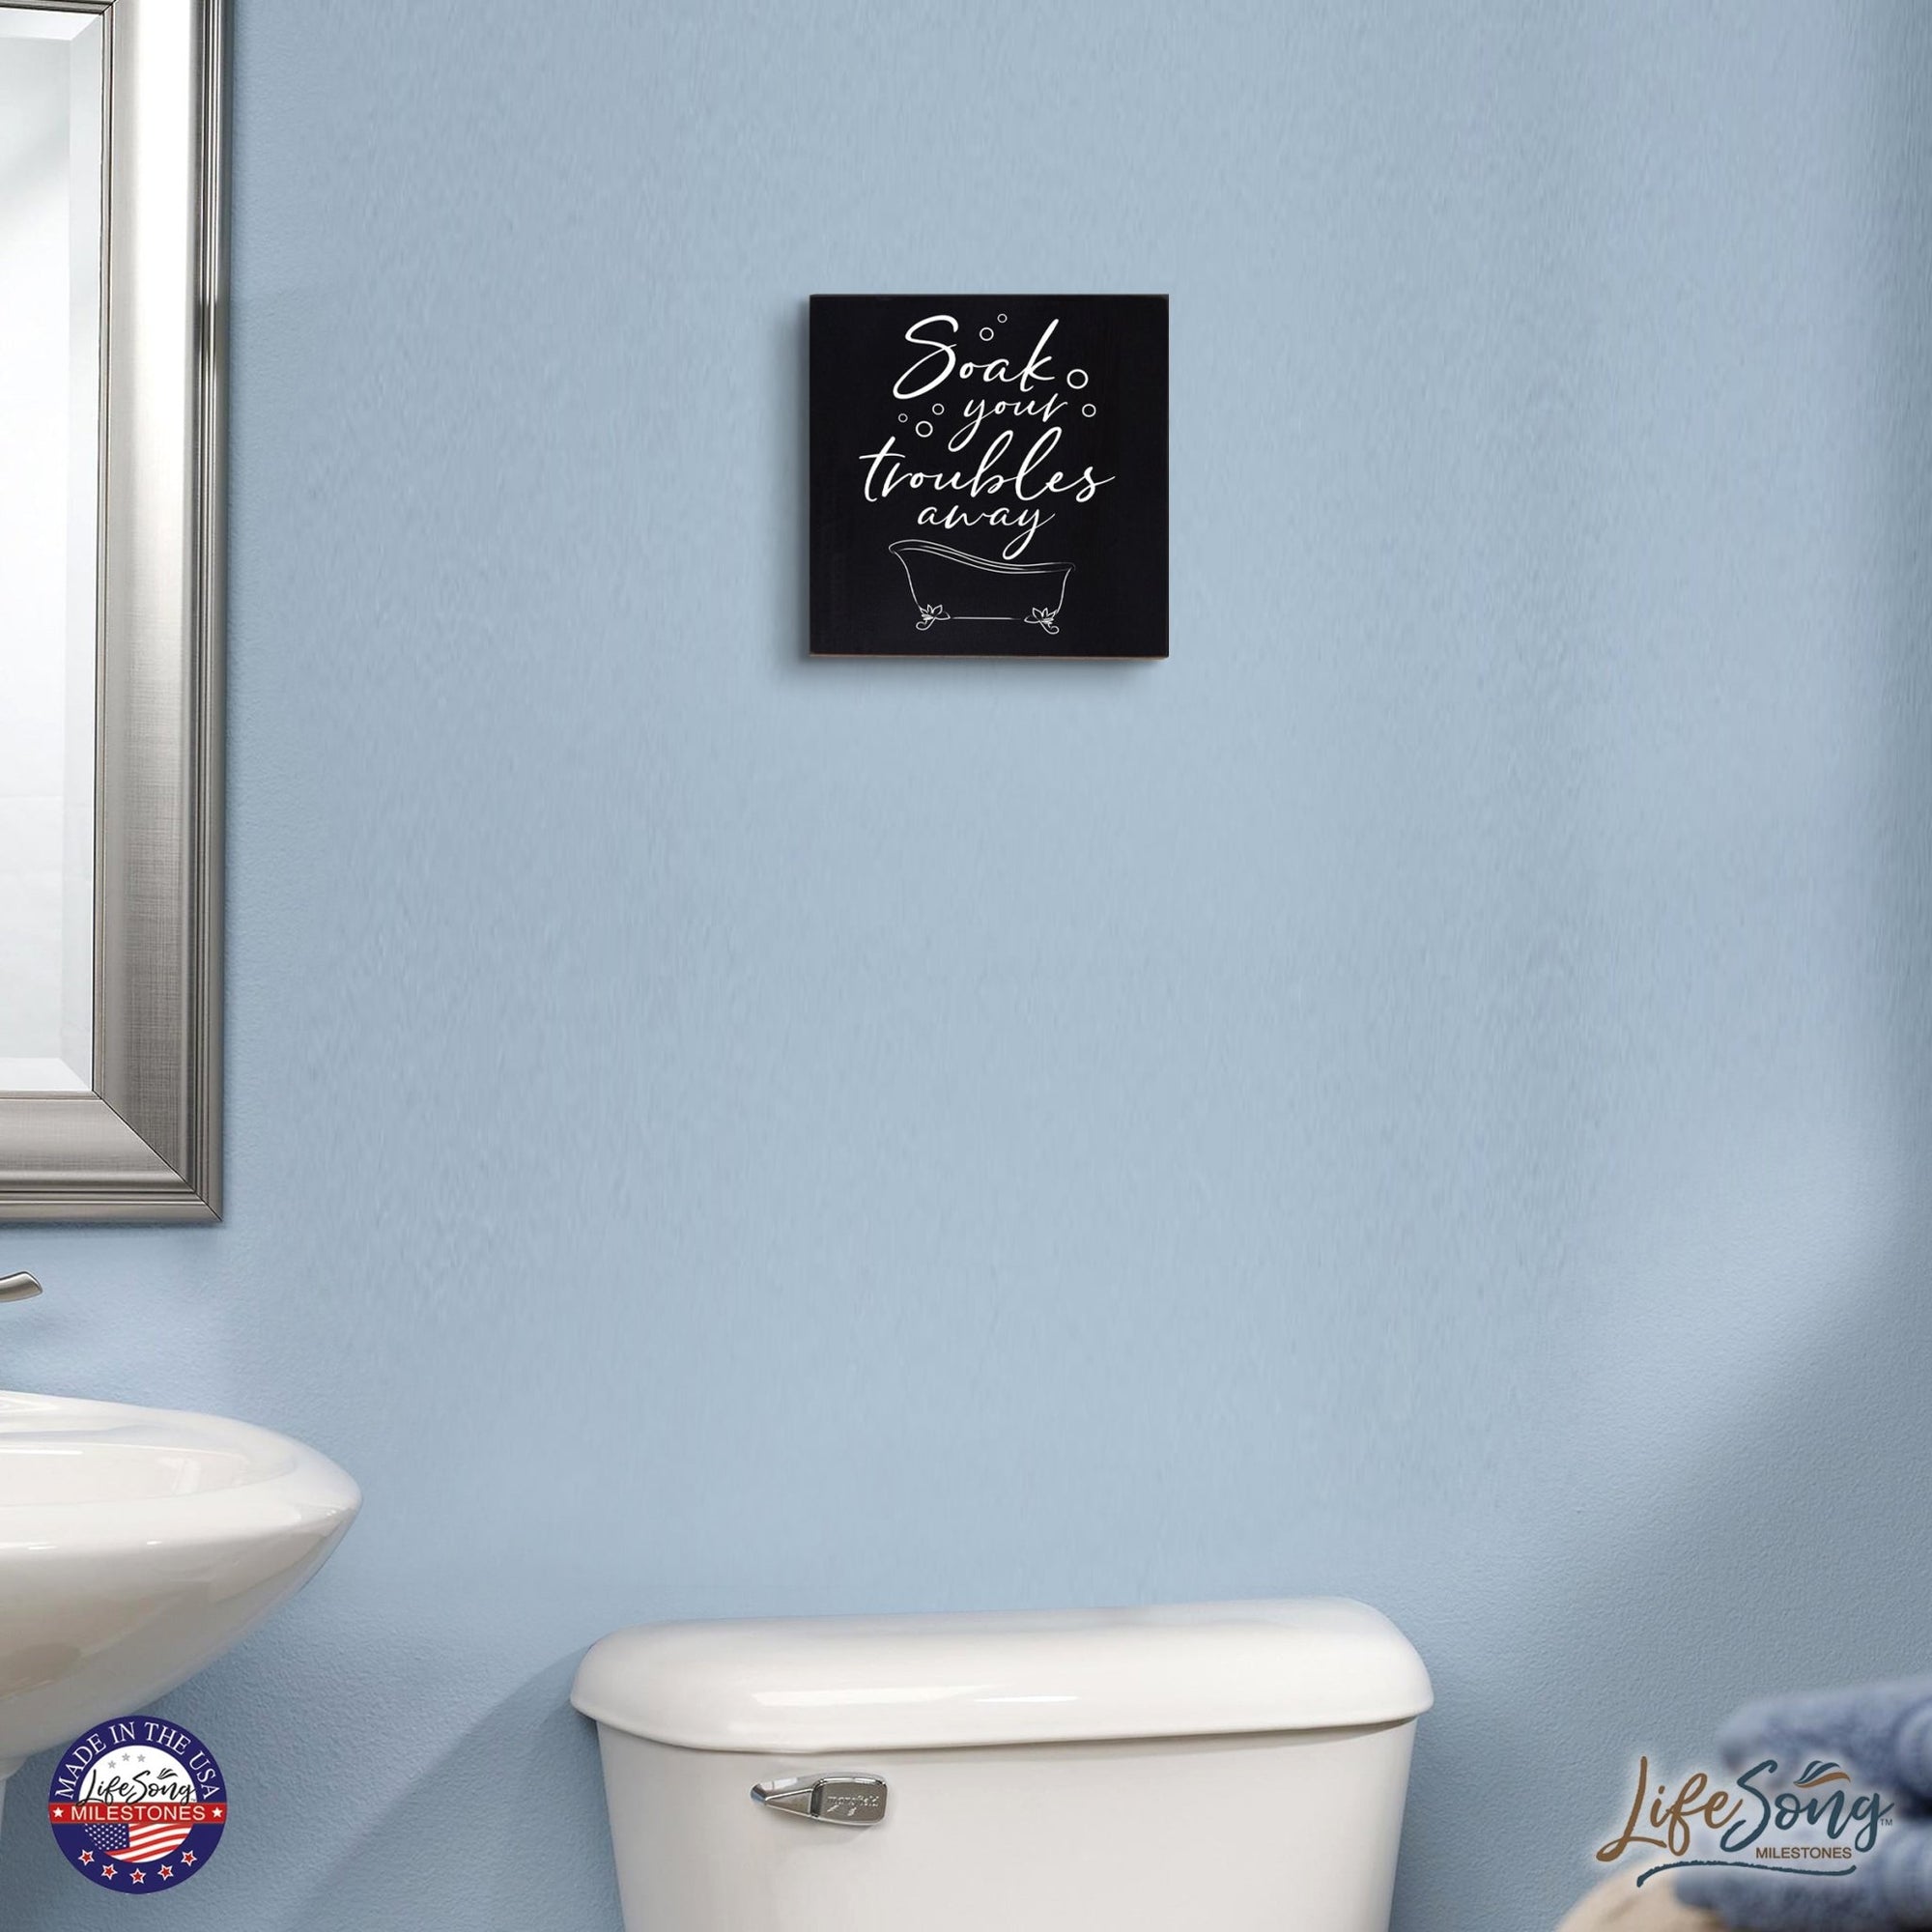 Inspirational Bathroom Decor 10x10 Shadow Box Soak Your Troubles - LifeSong Milestones